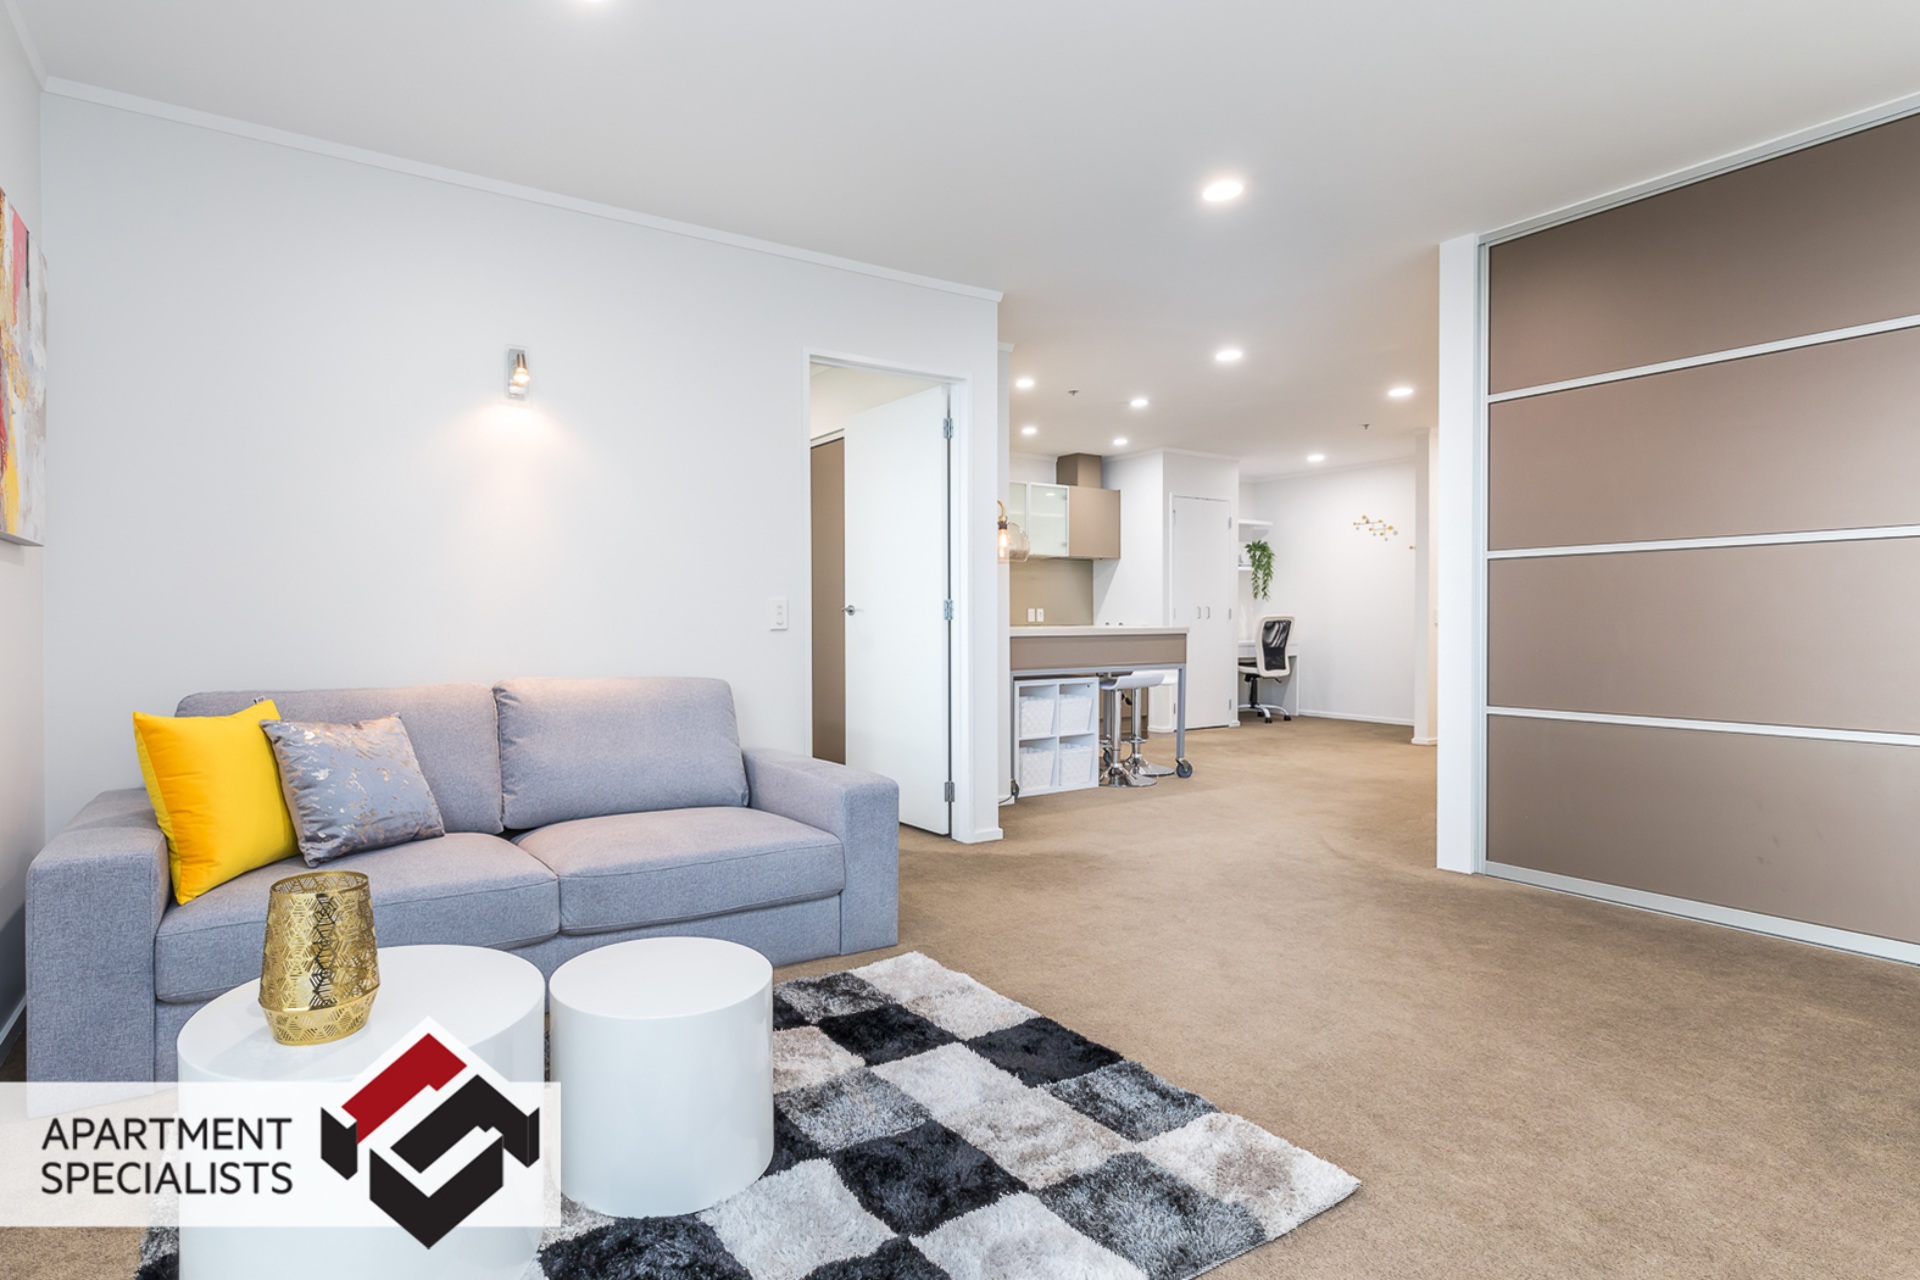 7 | 184 Symonds Street, Eden Terrace | Apartment Specialists